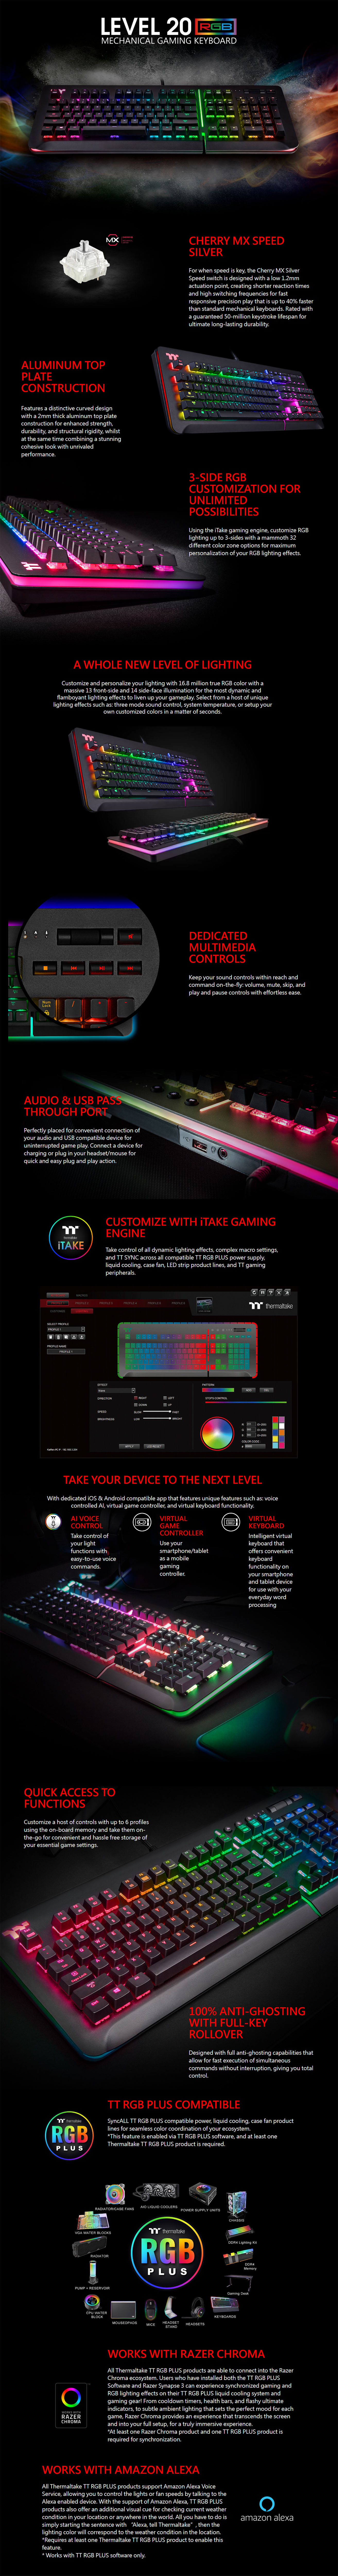 Keyboards-Thermaltake-Level-20-RGB-Mechanical-Gaming-Keyboard-Cherry-MX-Speed-Silver-1